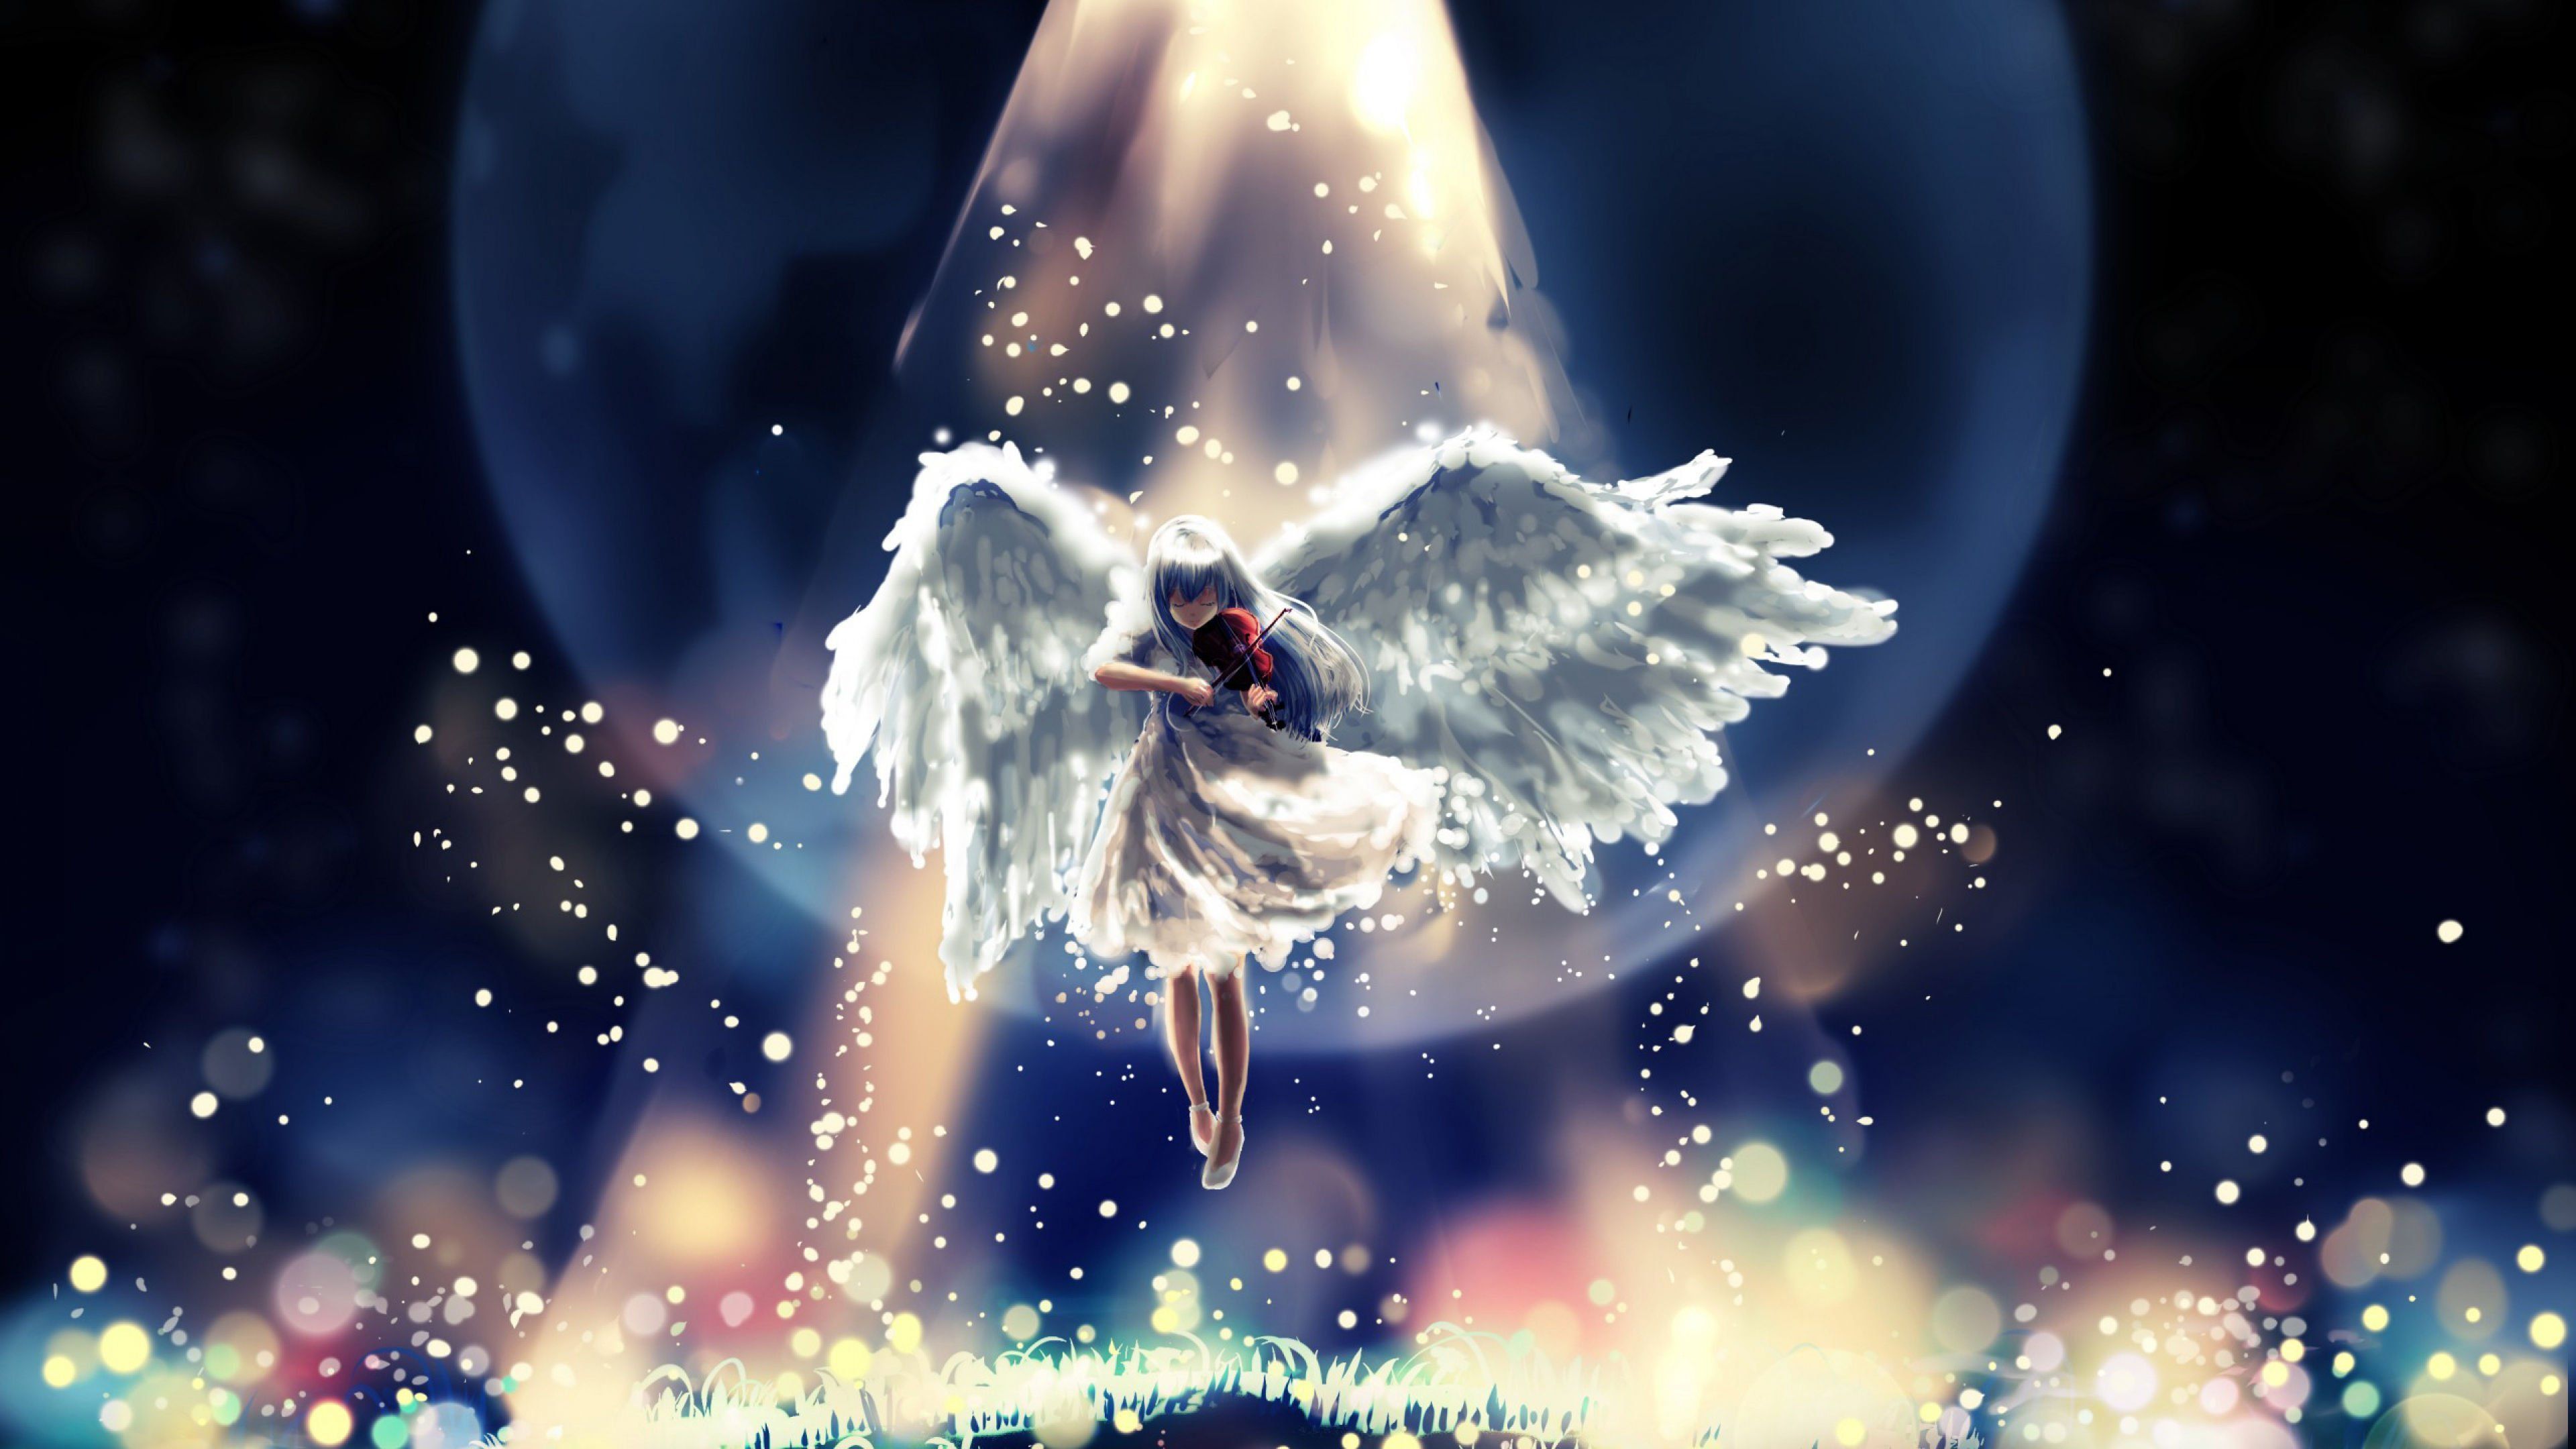 Fallen Angel 4K wallpaper. Angel wallpaper, Anime wallpaper, Sky anime